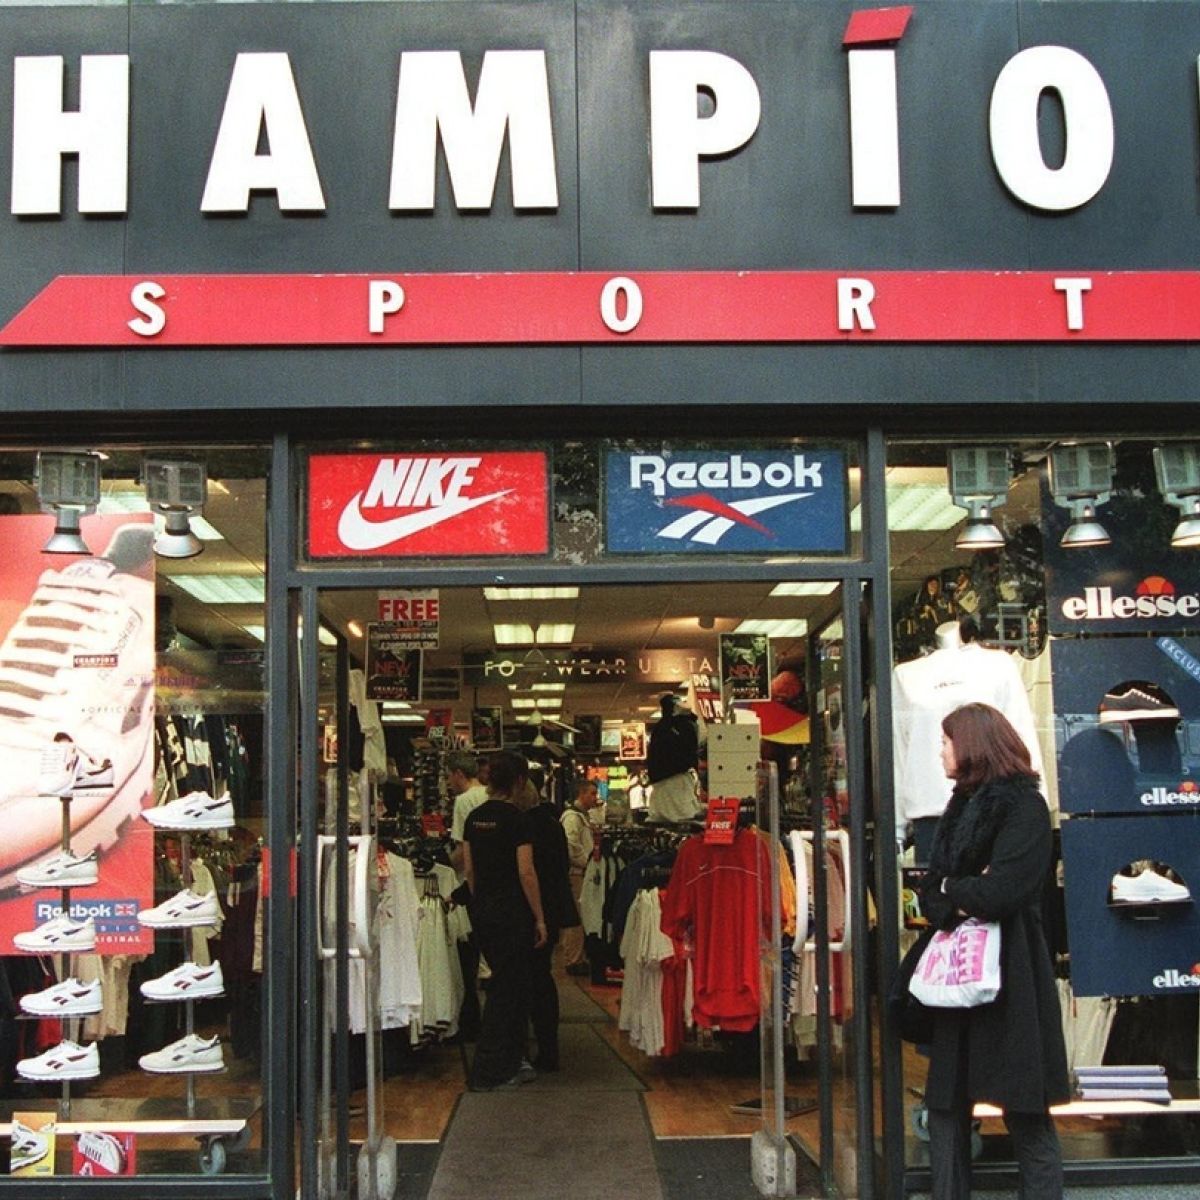 champions shopping